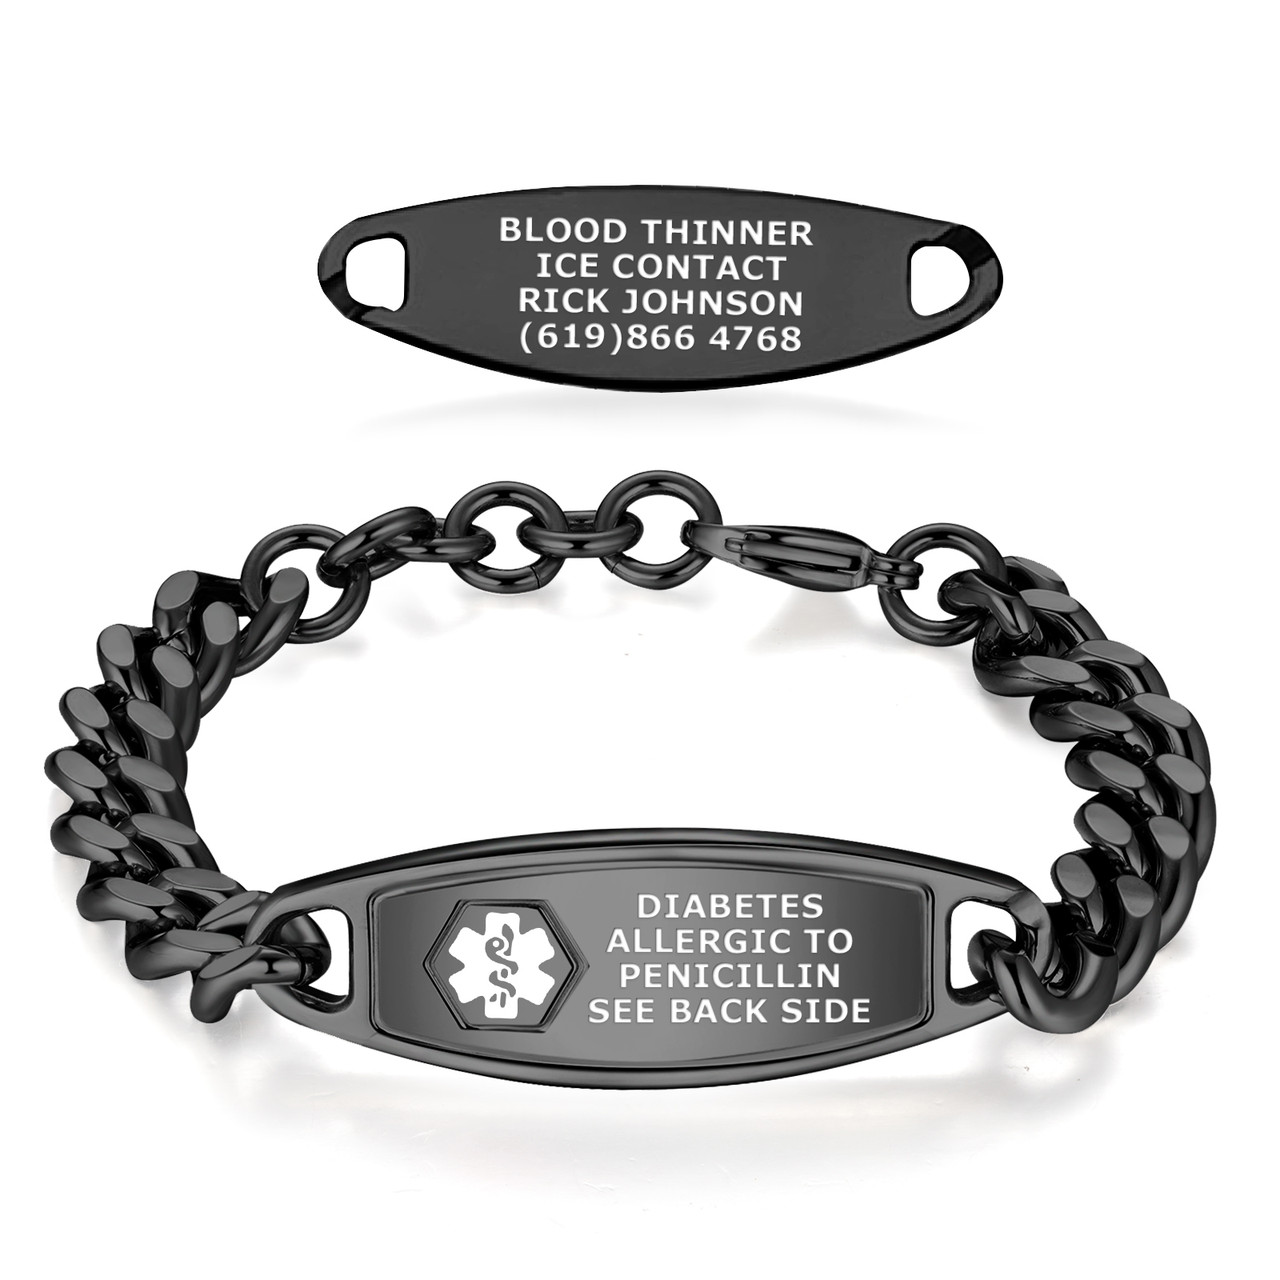 Steelman Custom Engraved Adjustable Medical Alert Bracelets